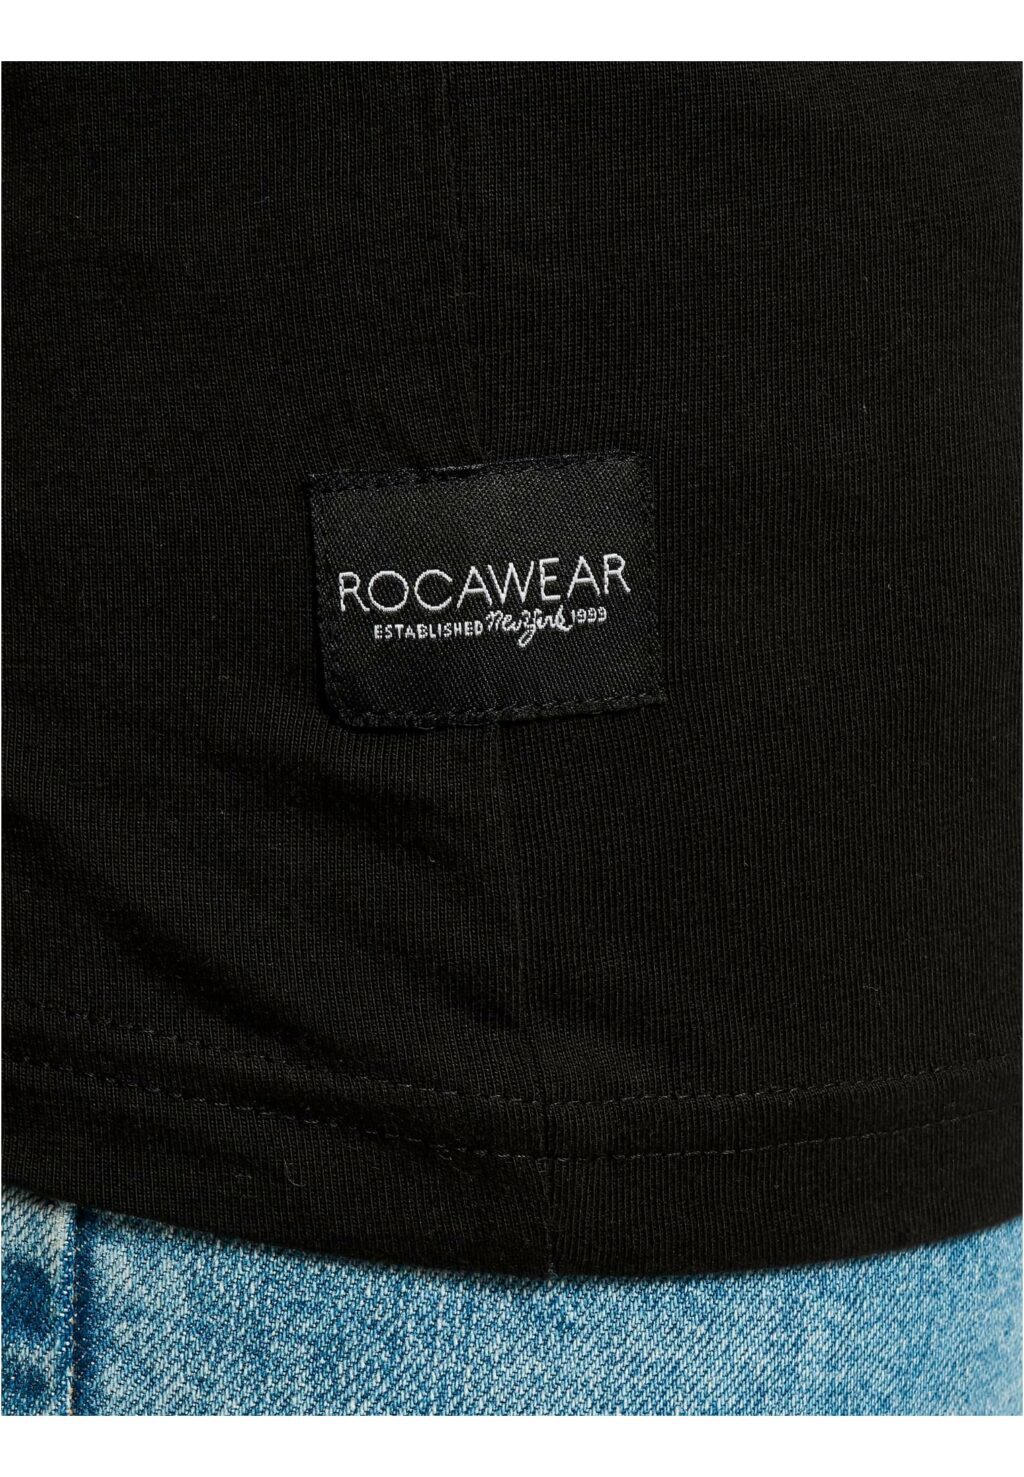 Rocawear NY 1999 T-Shirt black/lime RWTS024